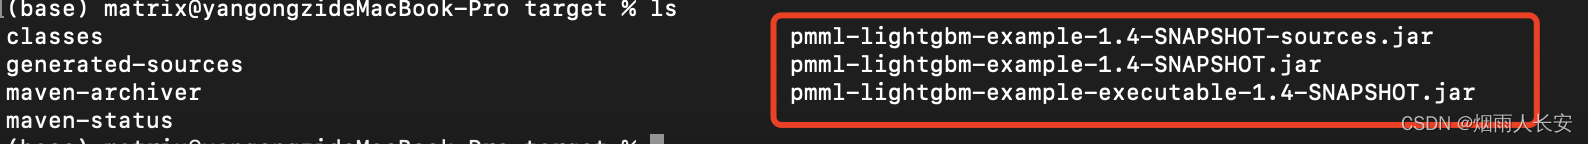 MAC系统 LightGBM模型转为pmml格式